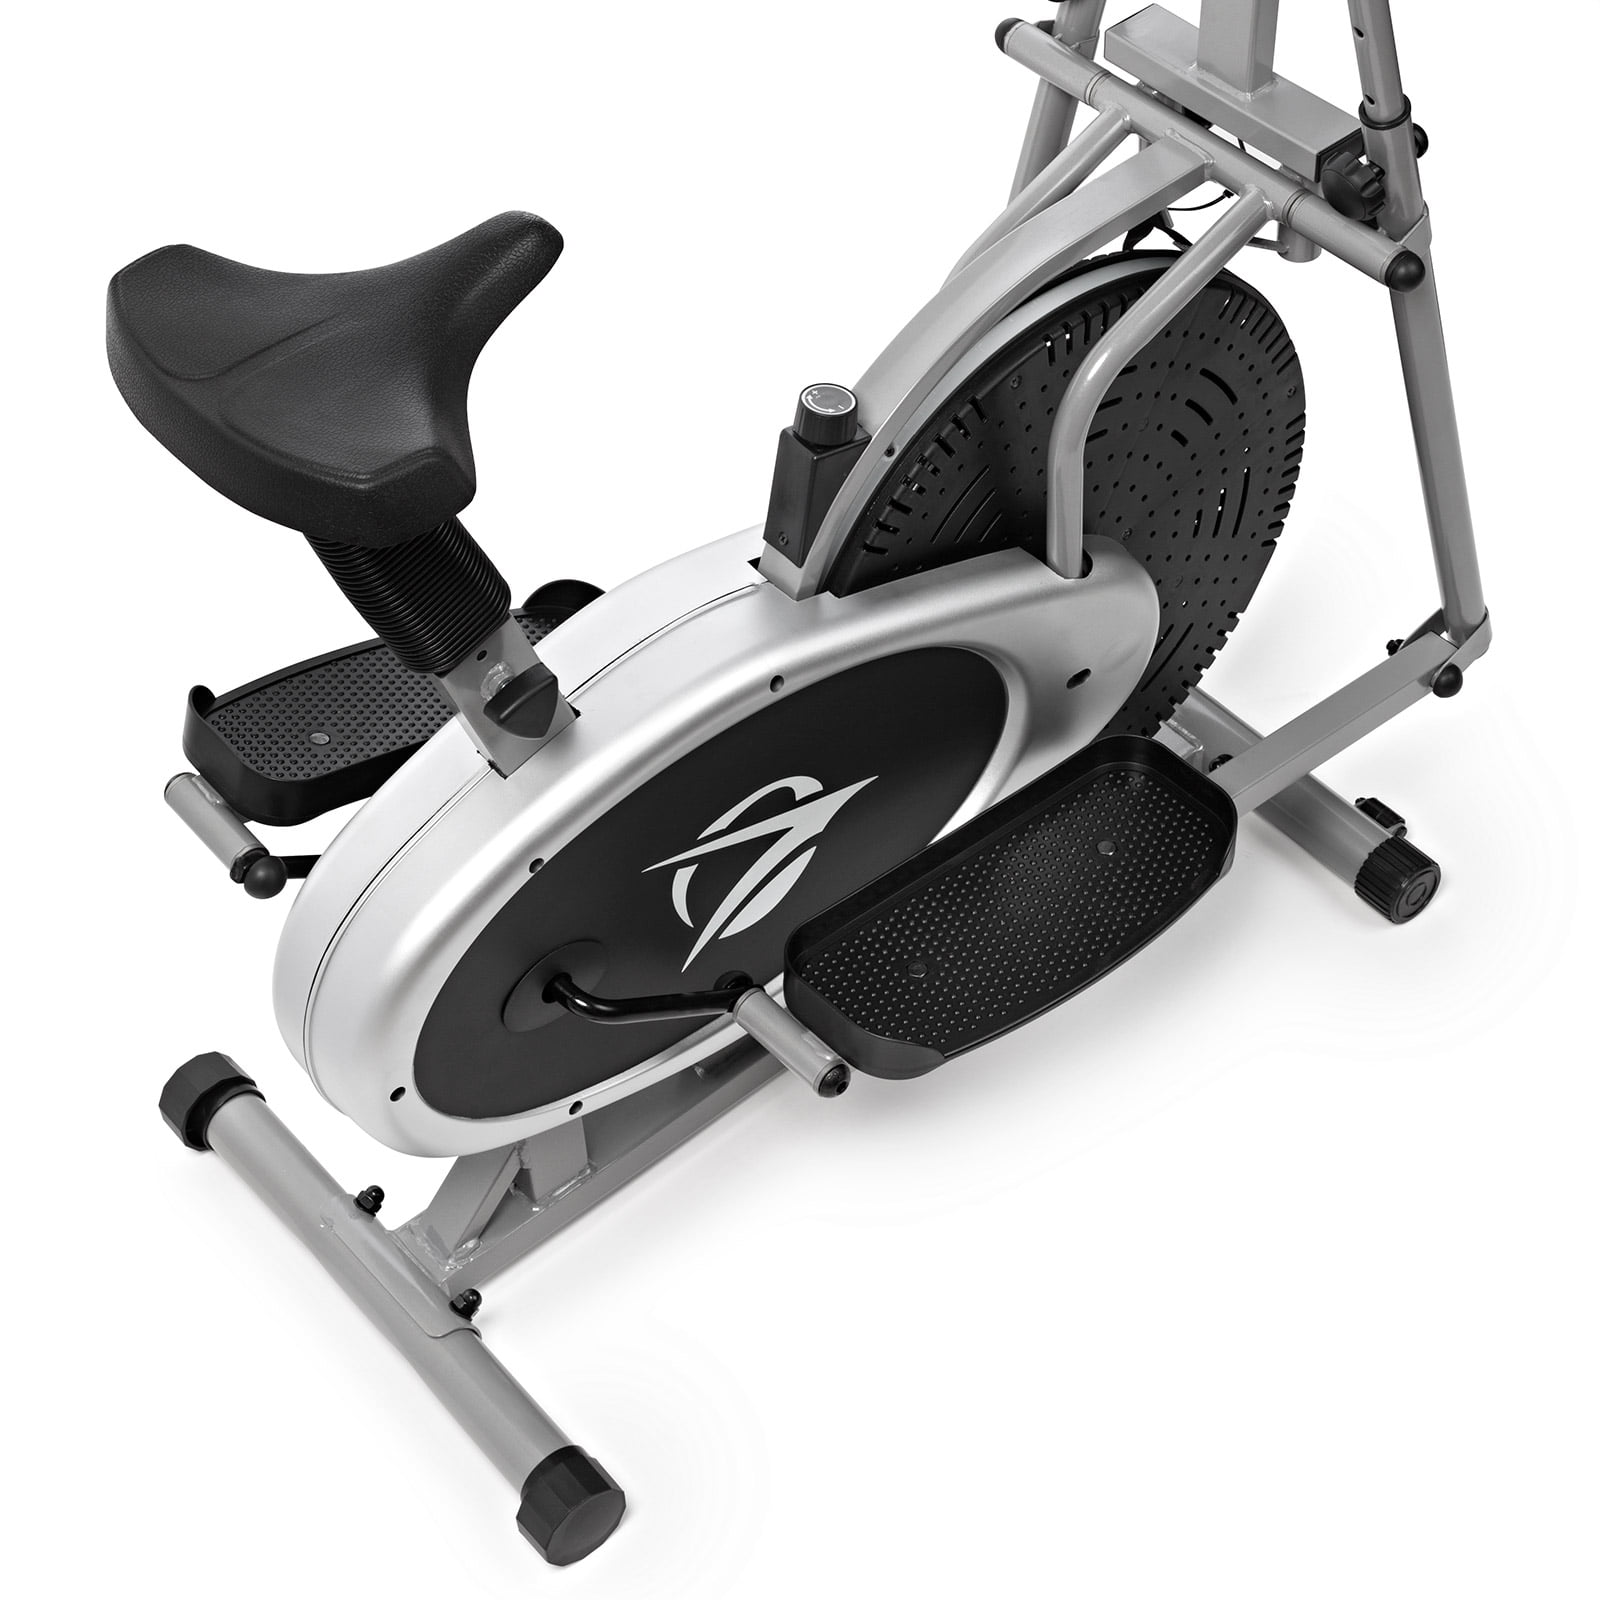 Elliptical Cross Trainer Exercise Bike Cardio Fitness Full Body Workout Machine 